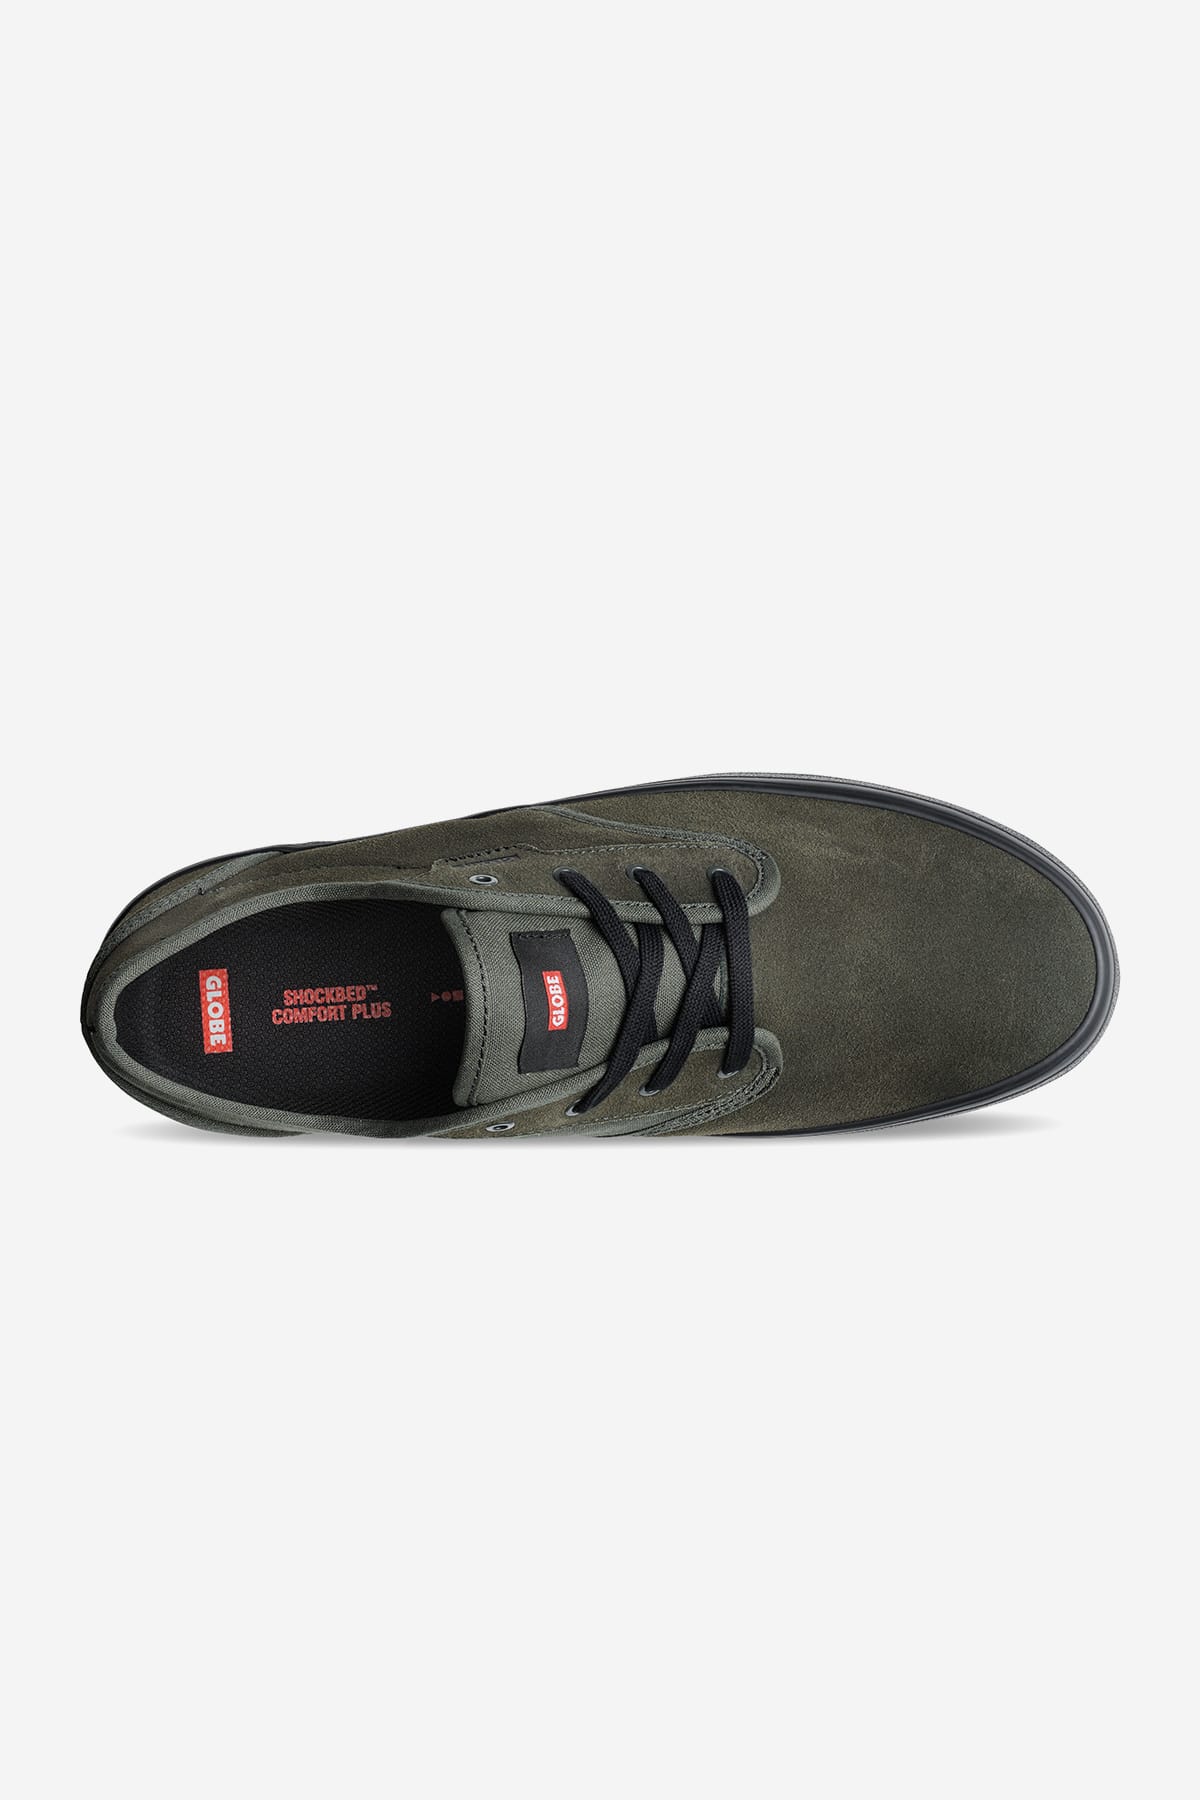 motley ii dark olive chaussures noires skateboard